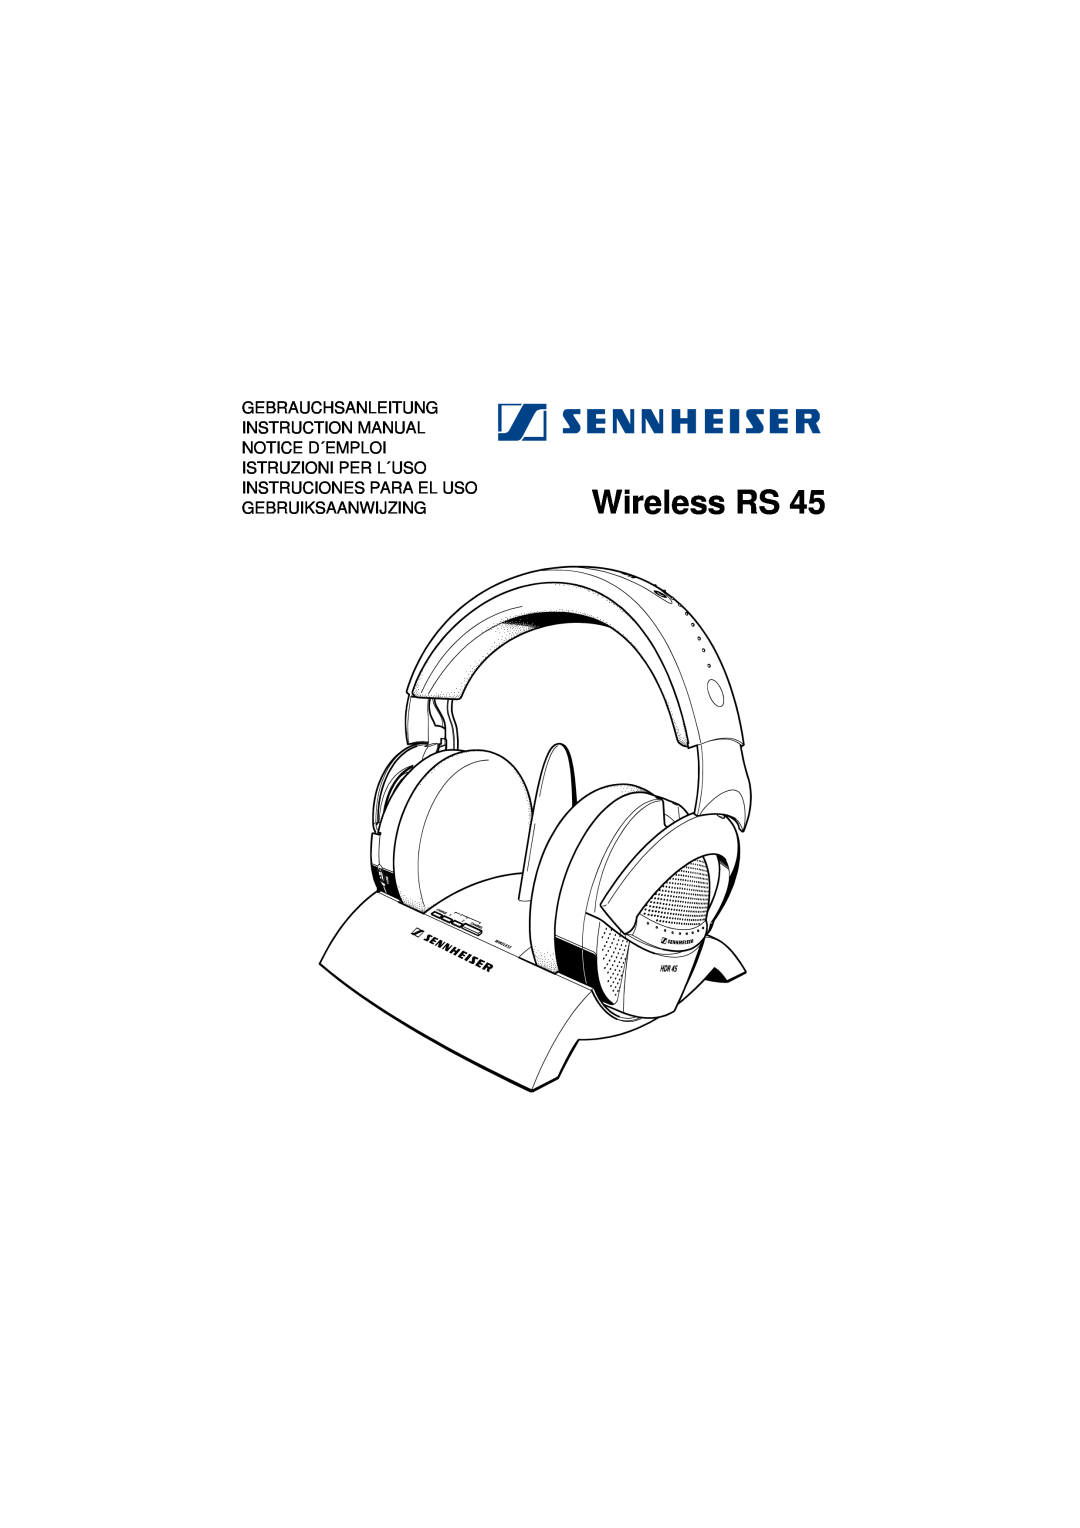 Sennheiser RS 45 instruction manual Wireless RS 